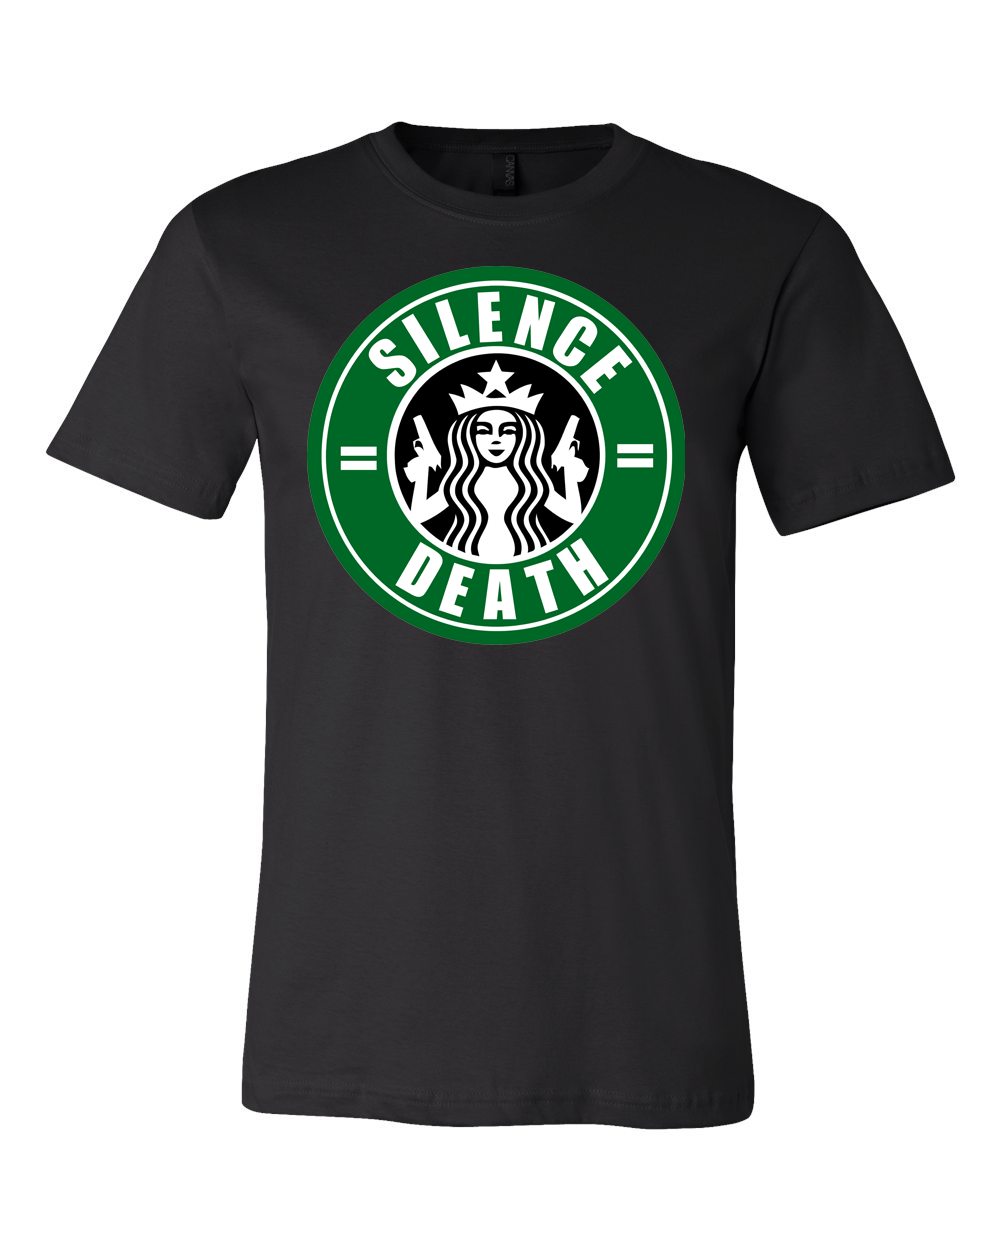 Silence Equals Death : Starbucks Tee